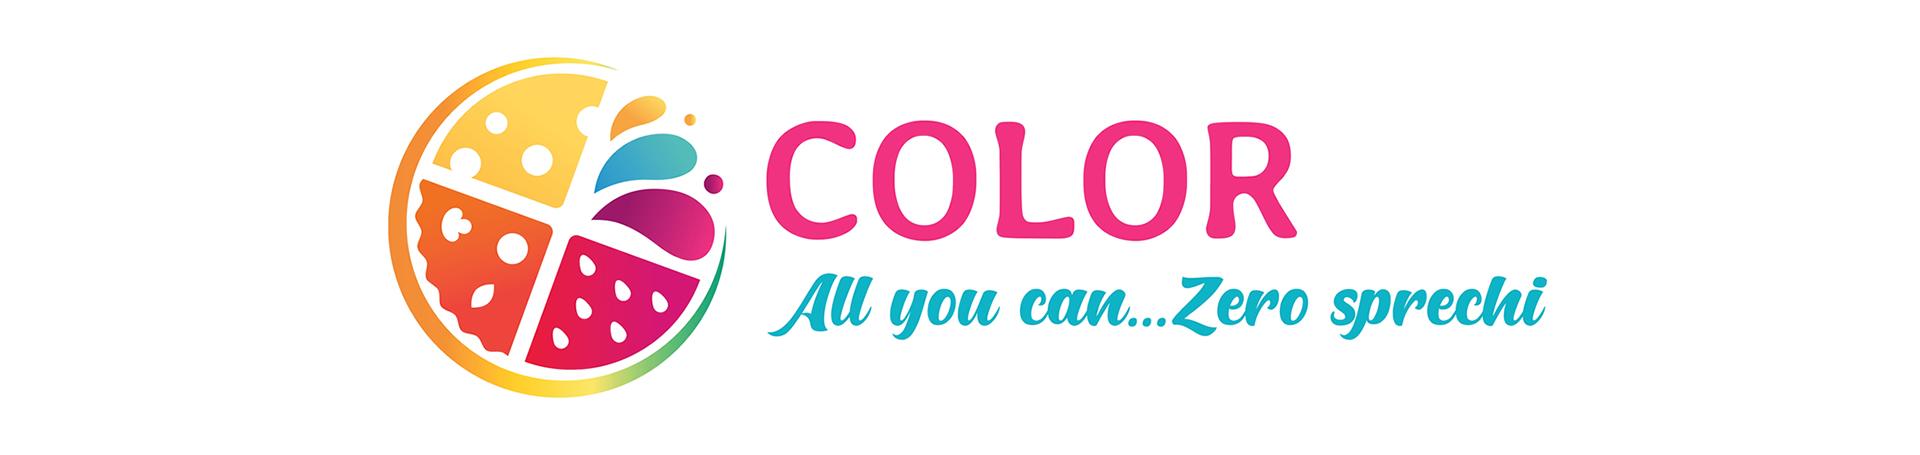 colorperlavillage de all-you-can-zero-waste 009